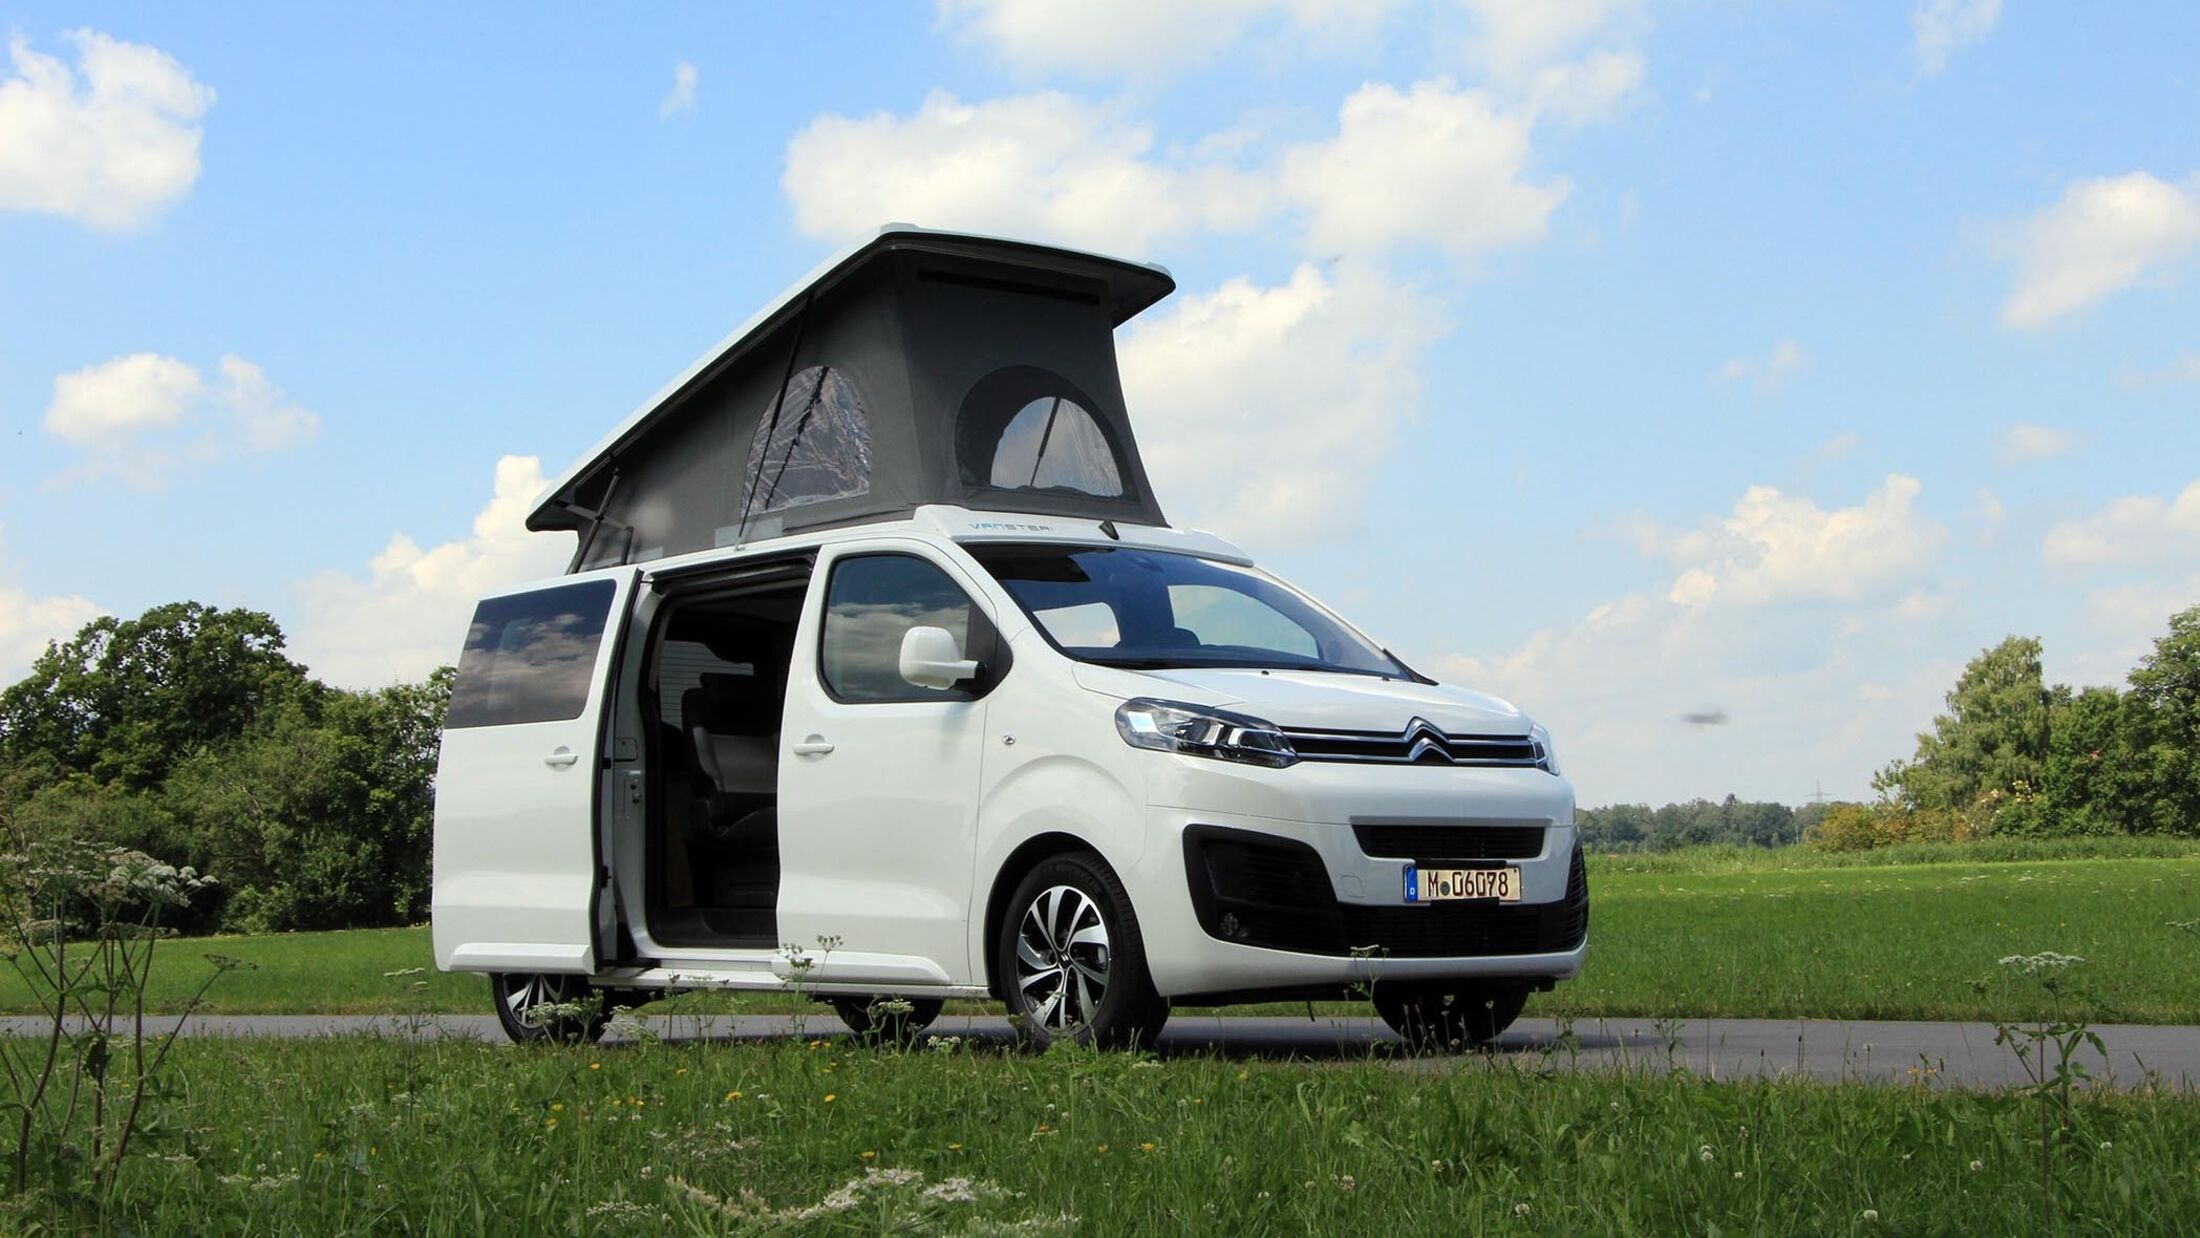 Campingmöbel-Module für Pkw, Vans, Transporter